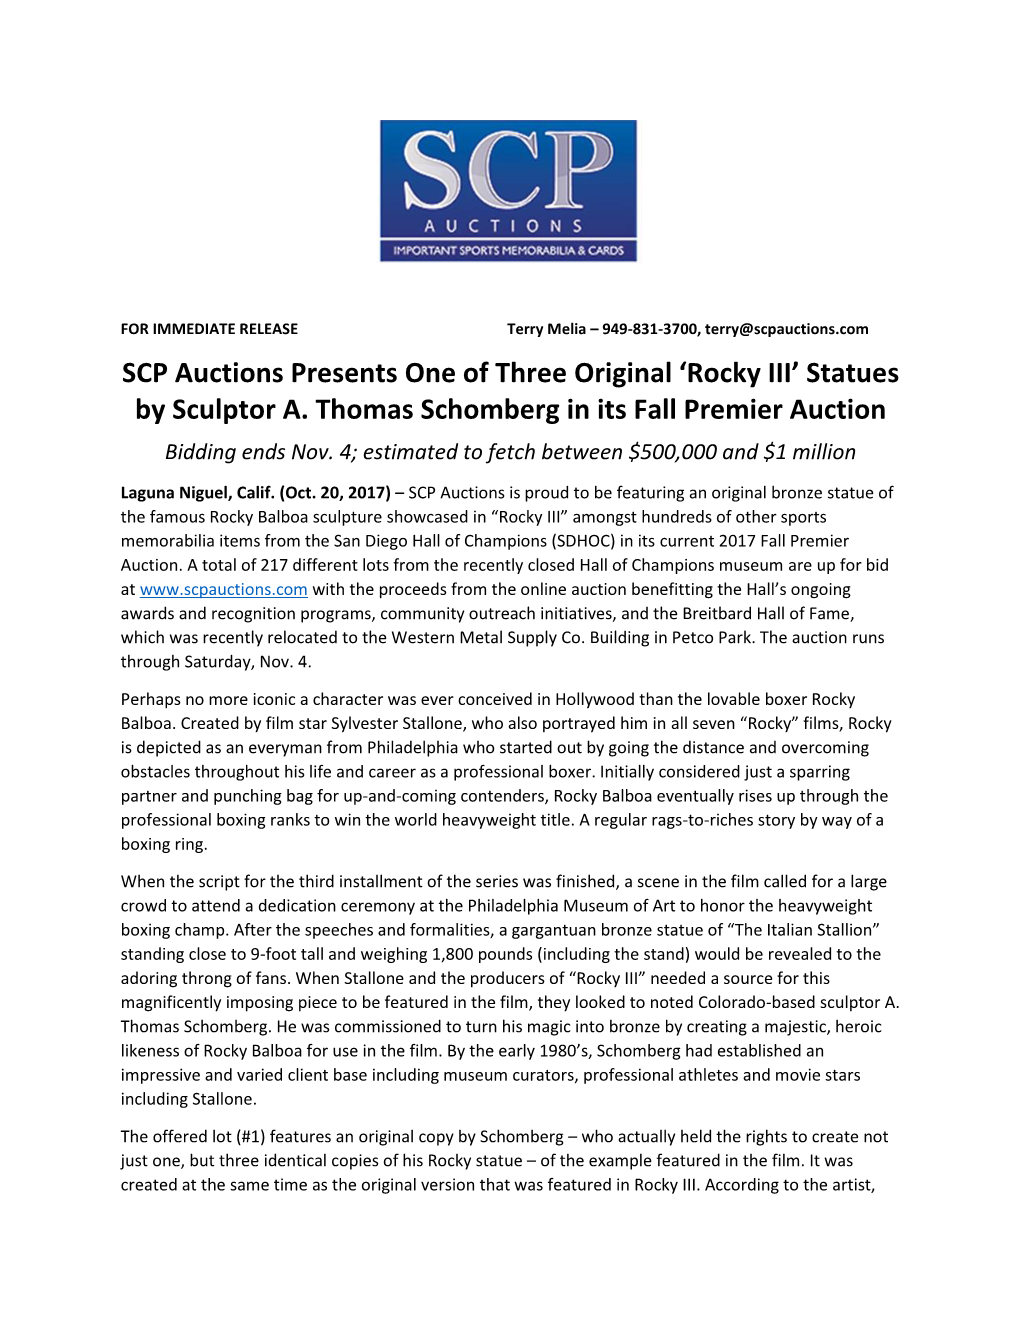 SCP Auctions Presents the Rocky Balboa Bronze Statue PR